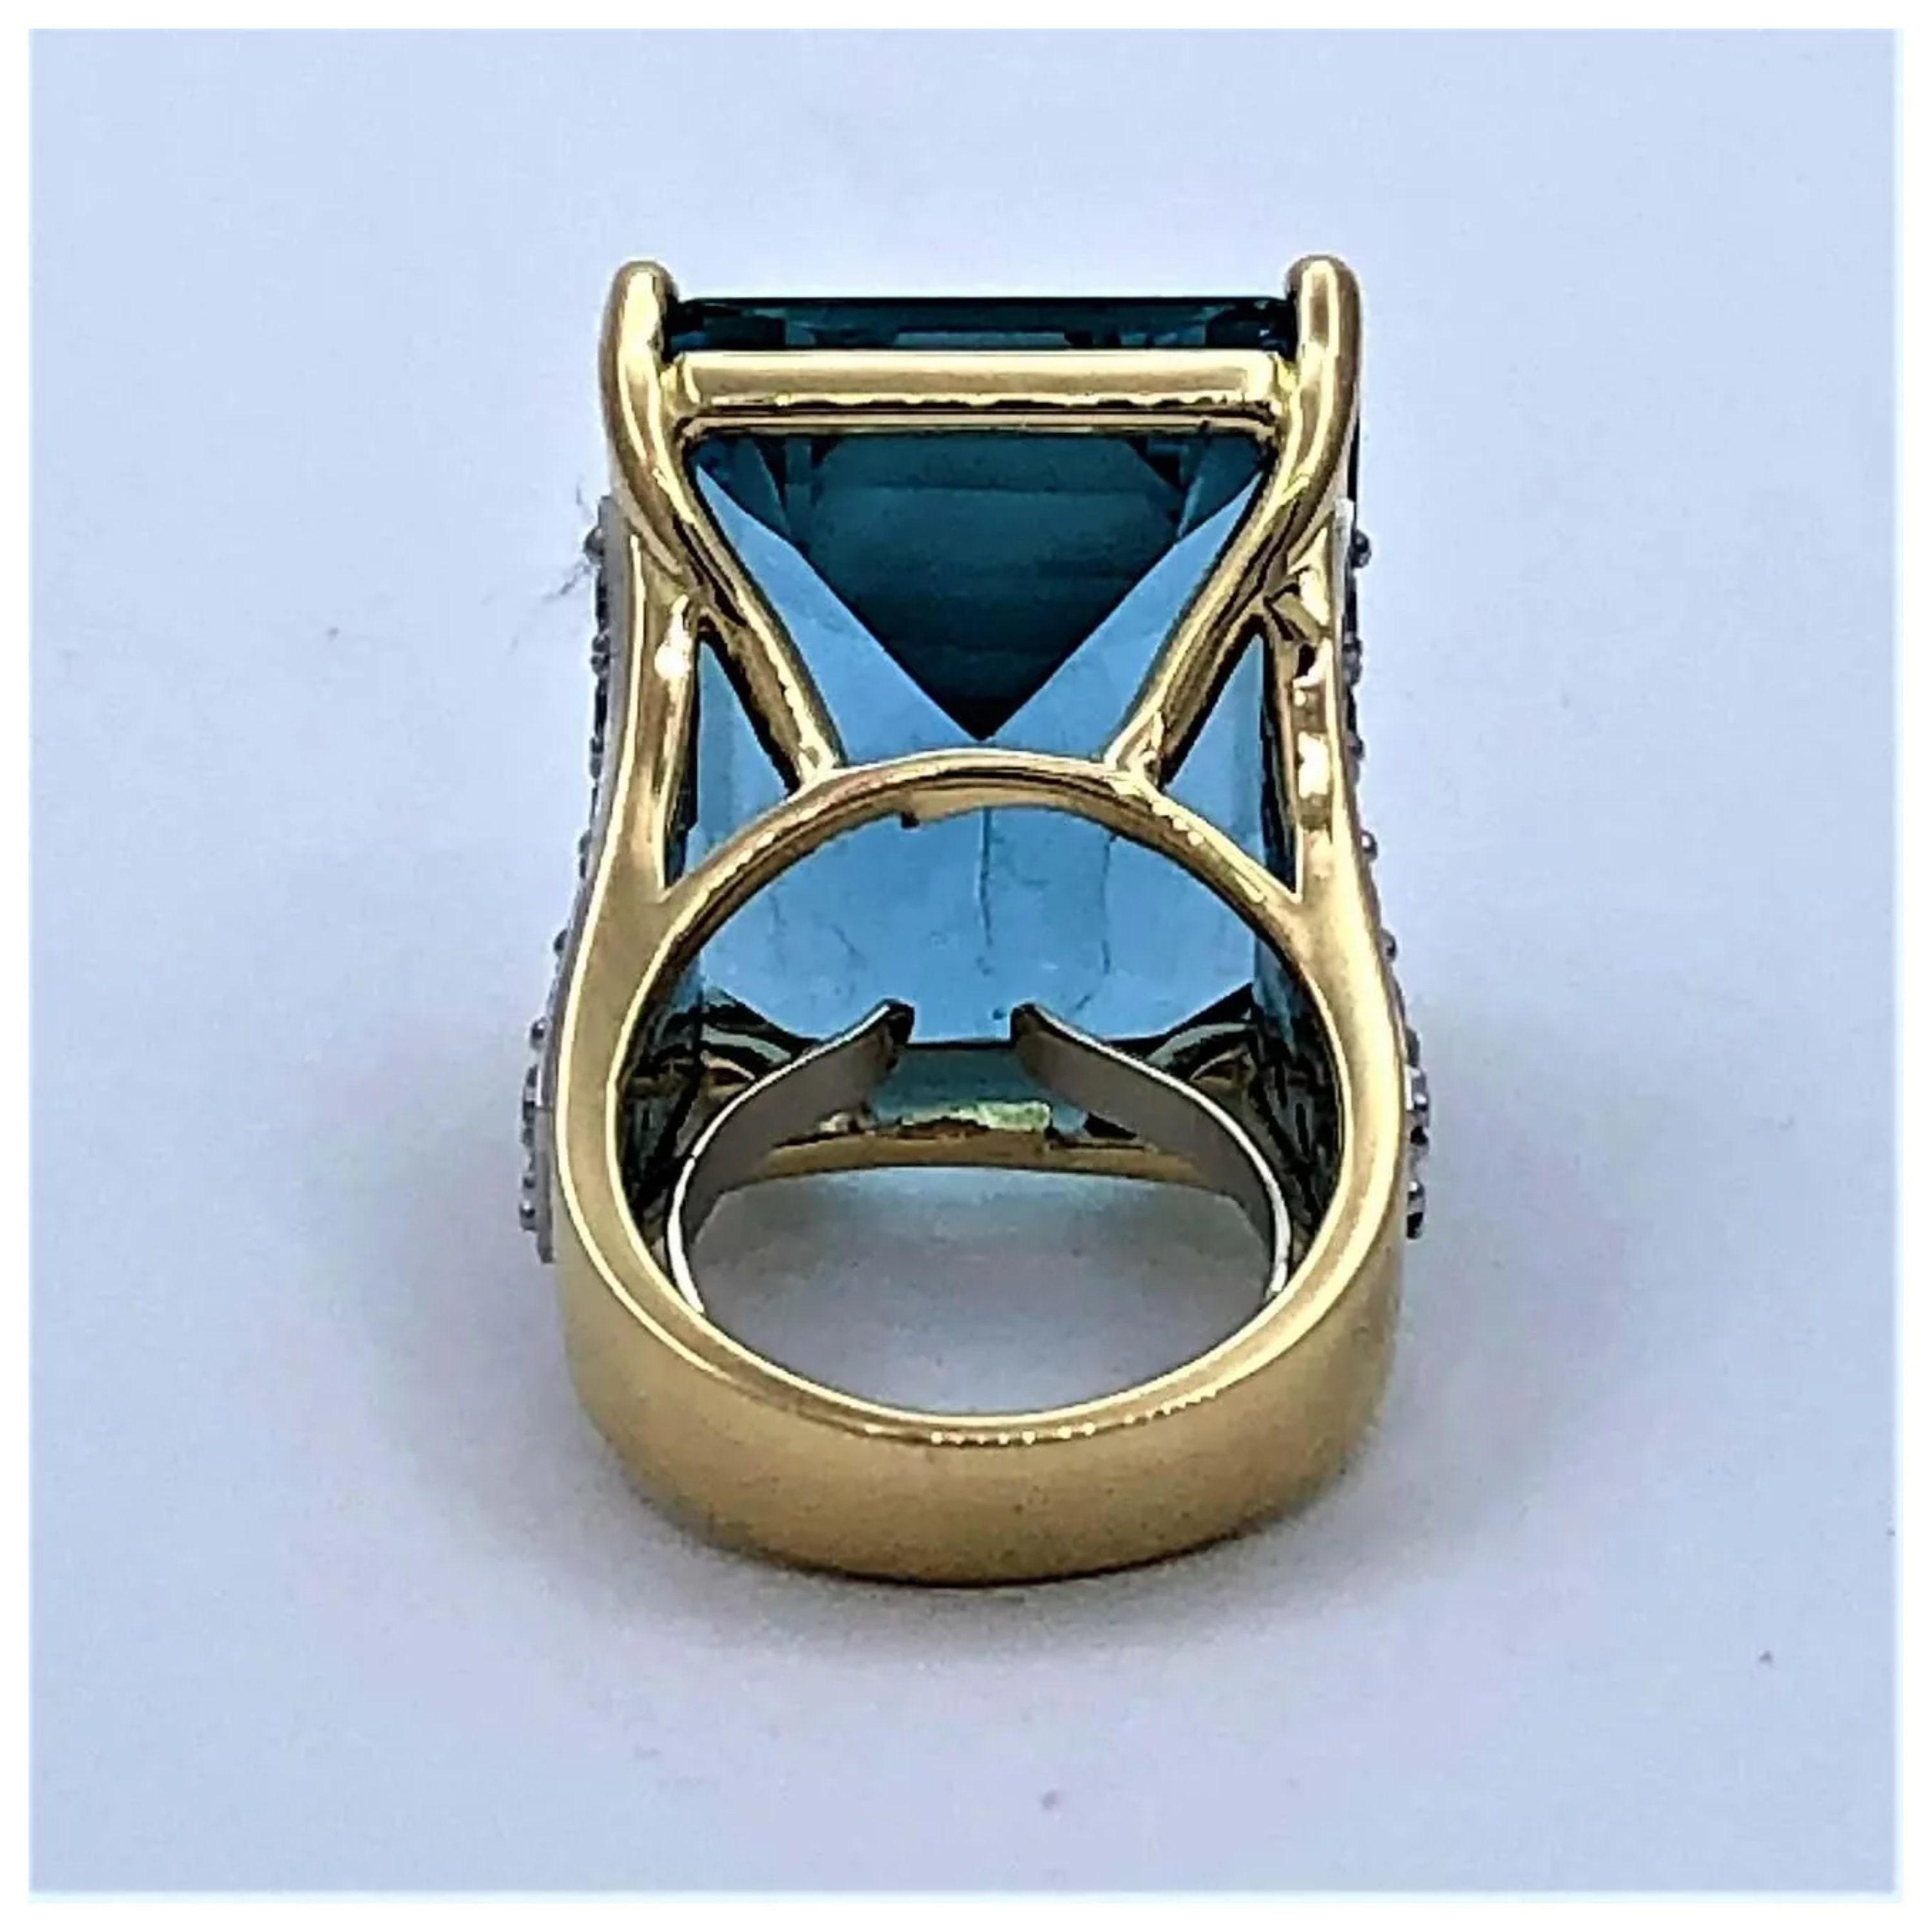 For Sale:  3.99 Carat Natural Emerald Cut Aquamarine Diamond Engagement Ring Cocktail Ring 4